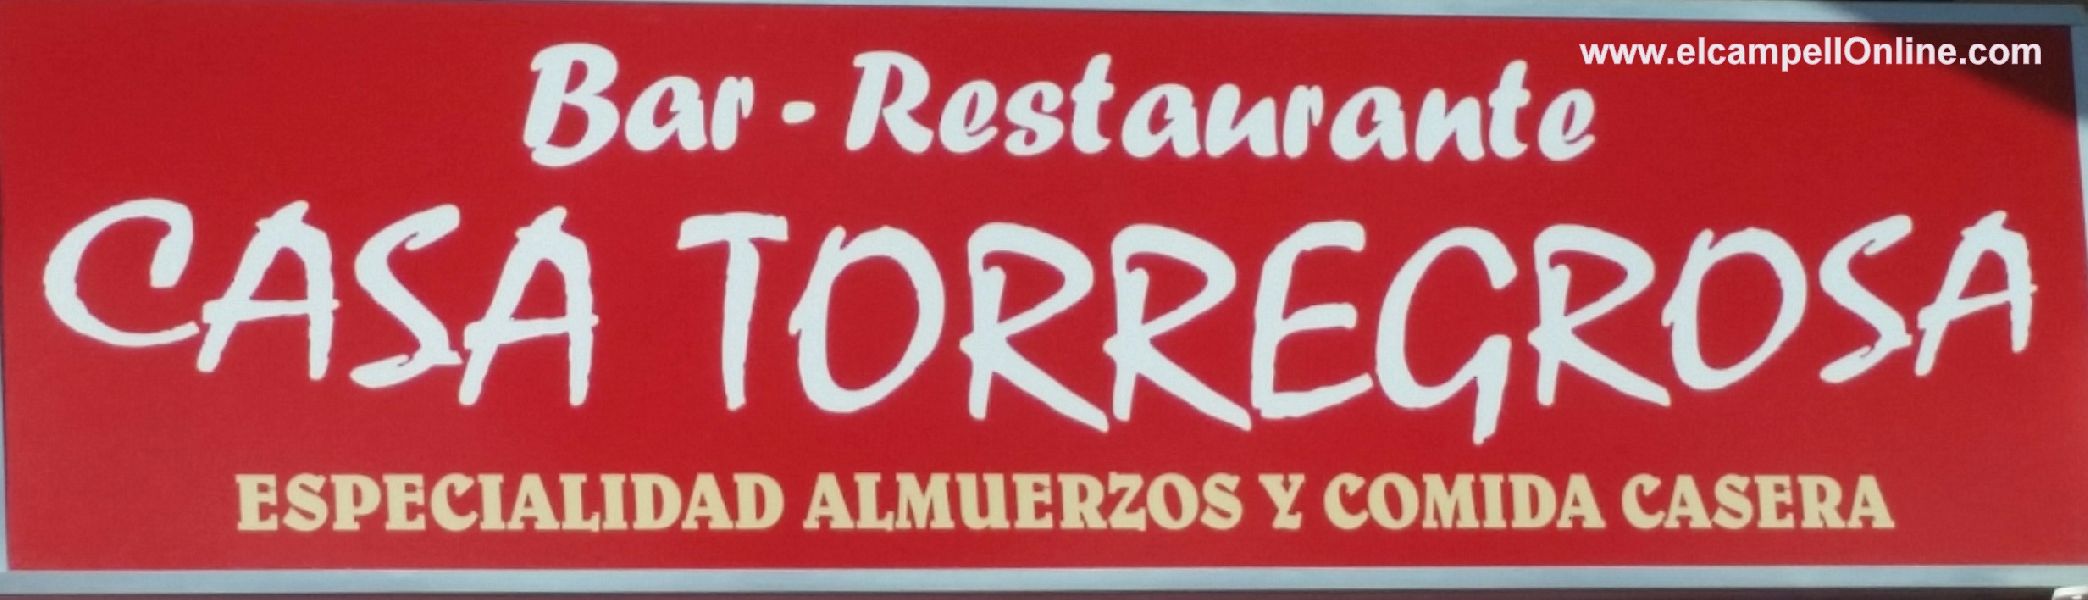 Bar-Restaurante CASA TORREGROSA